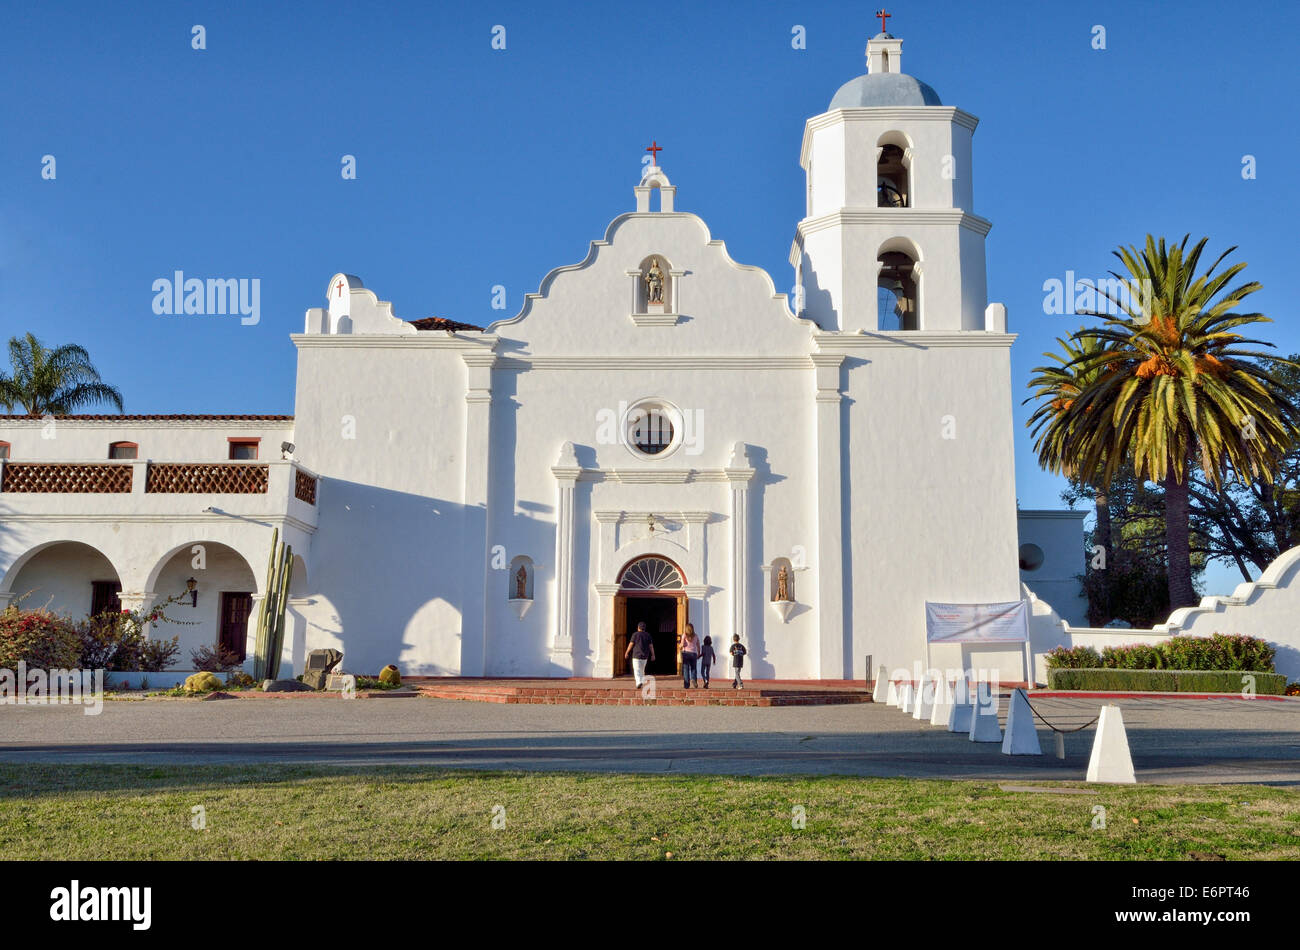 Mission San Luis Rey de Francia, facade with a bell tower, Oceanside, California, USA Stock Photo